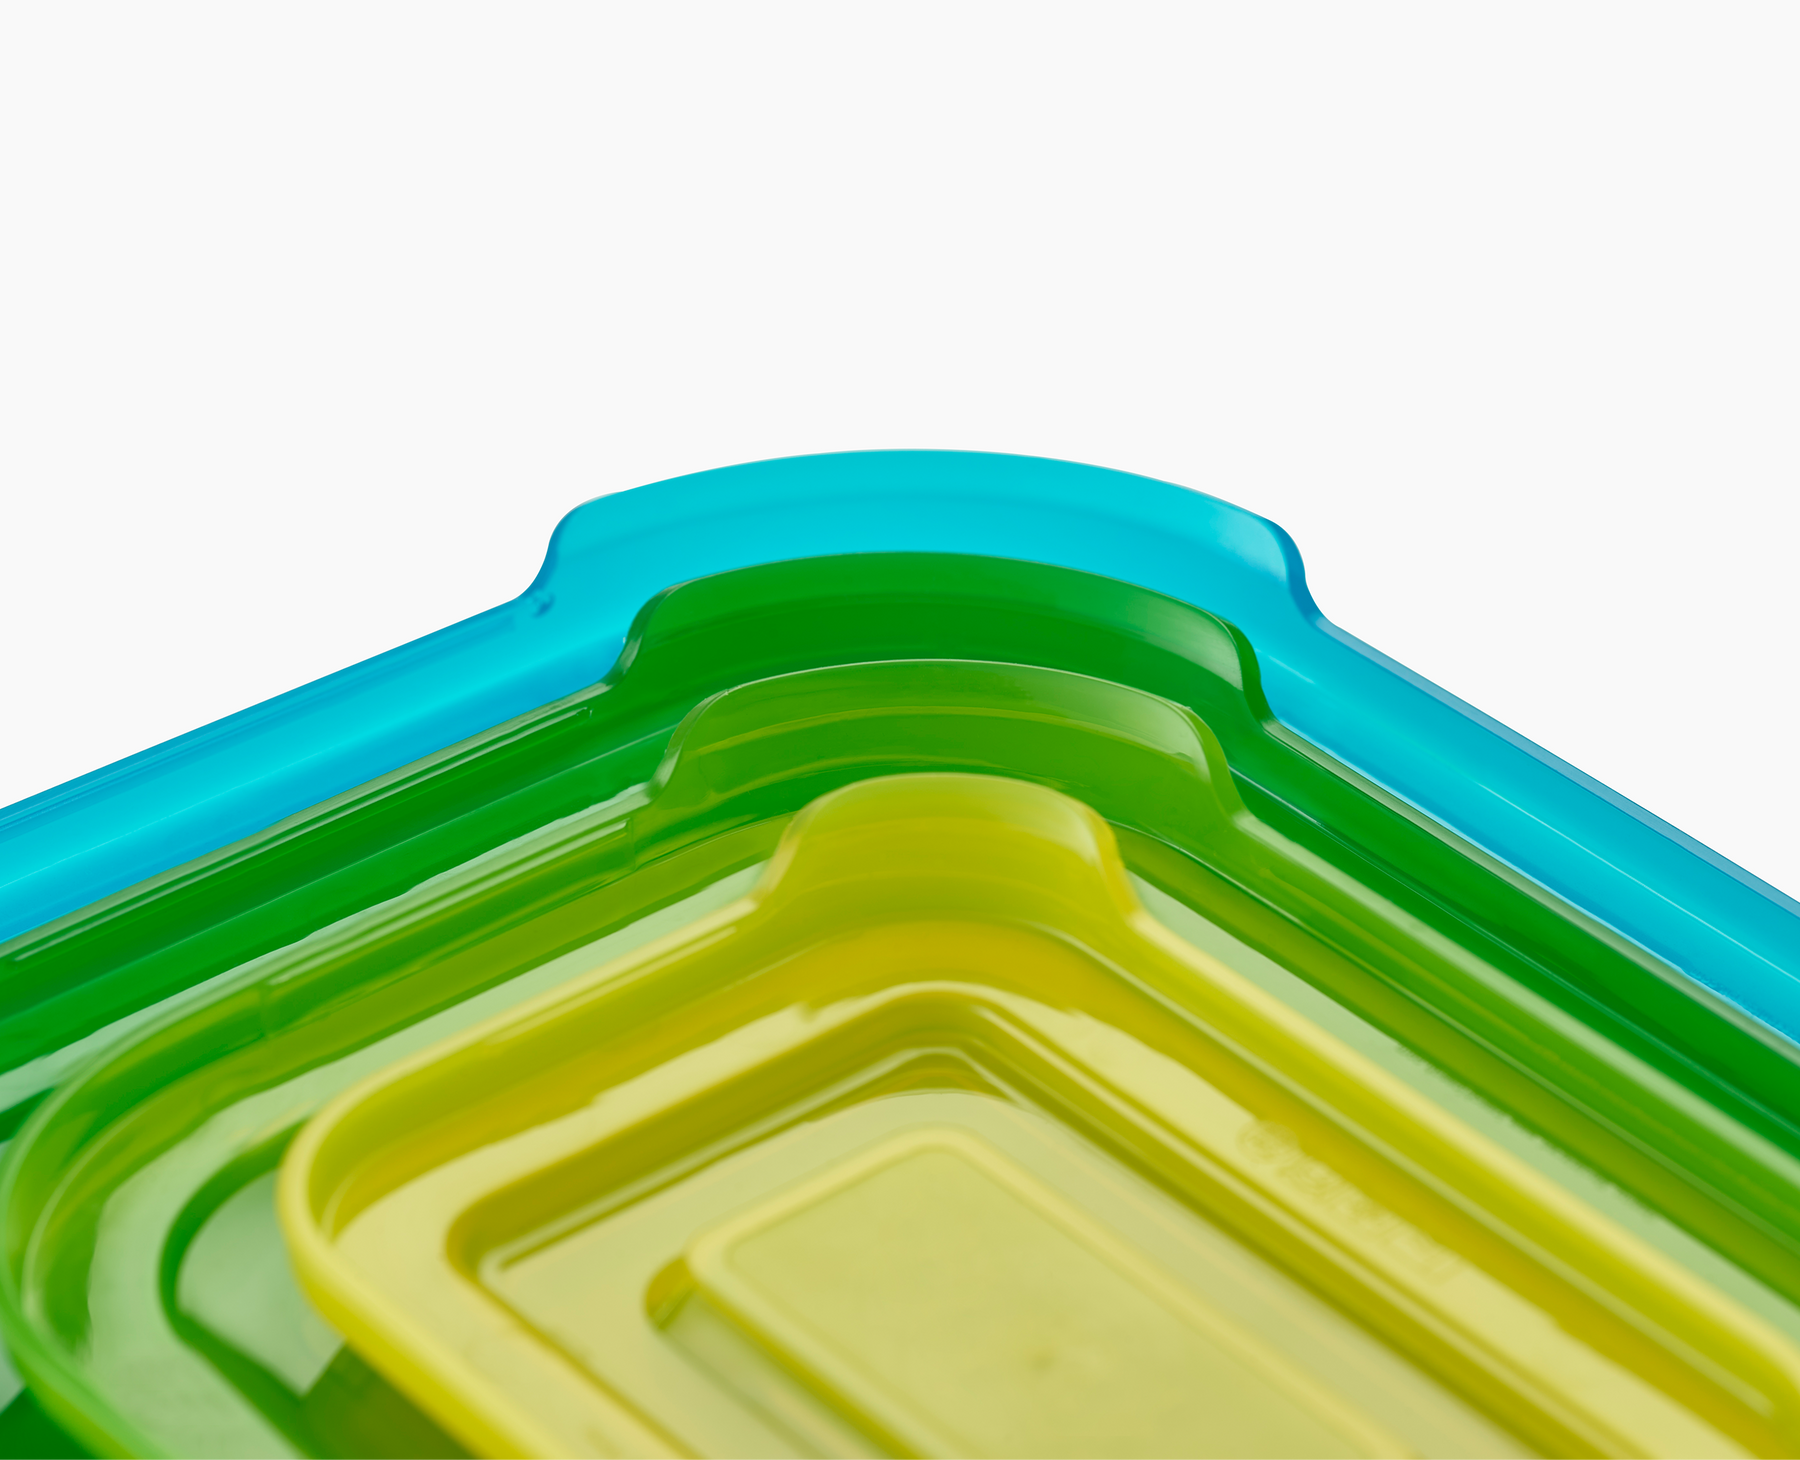 Nest™ Glass Multicolour Food Storage Set